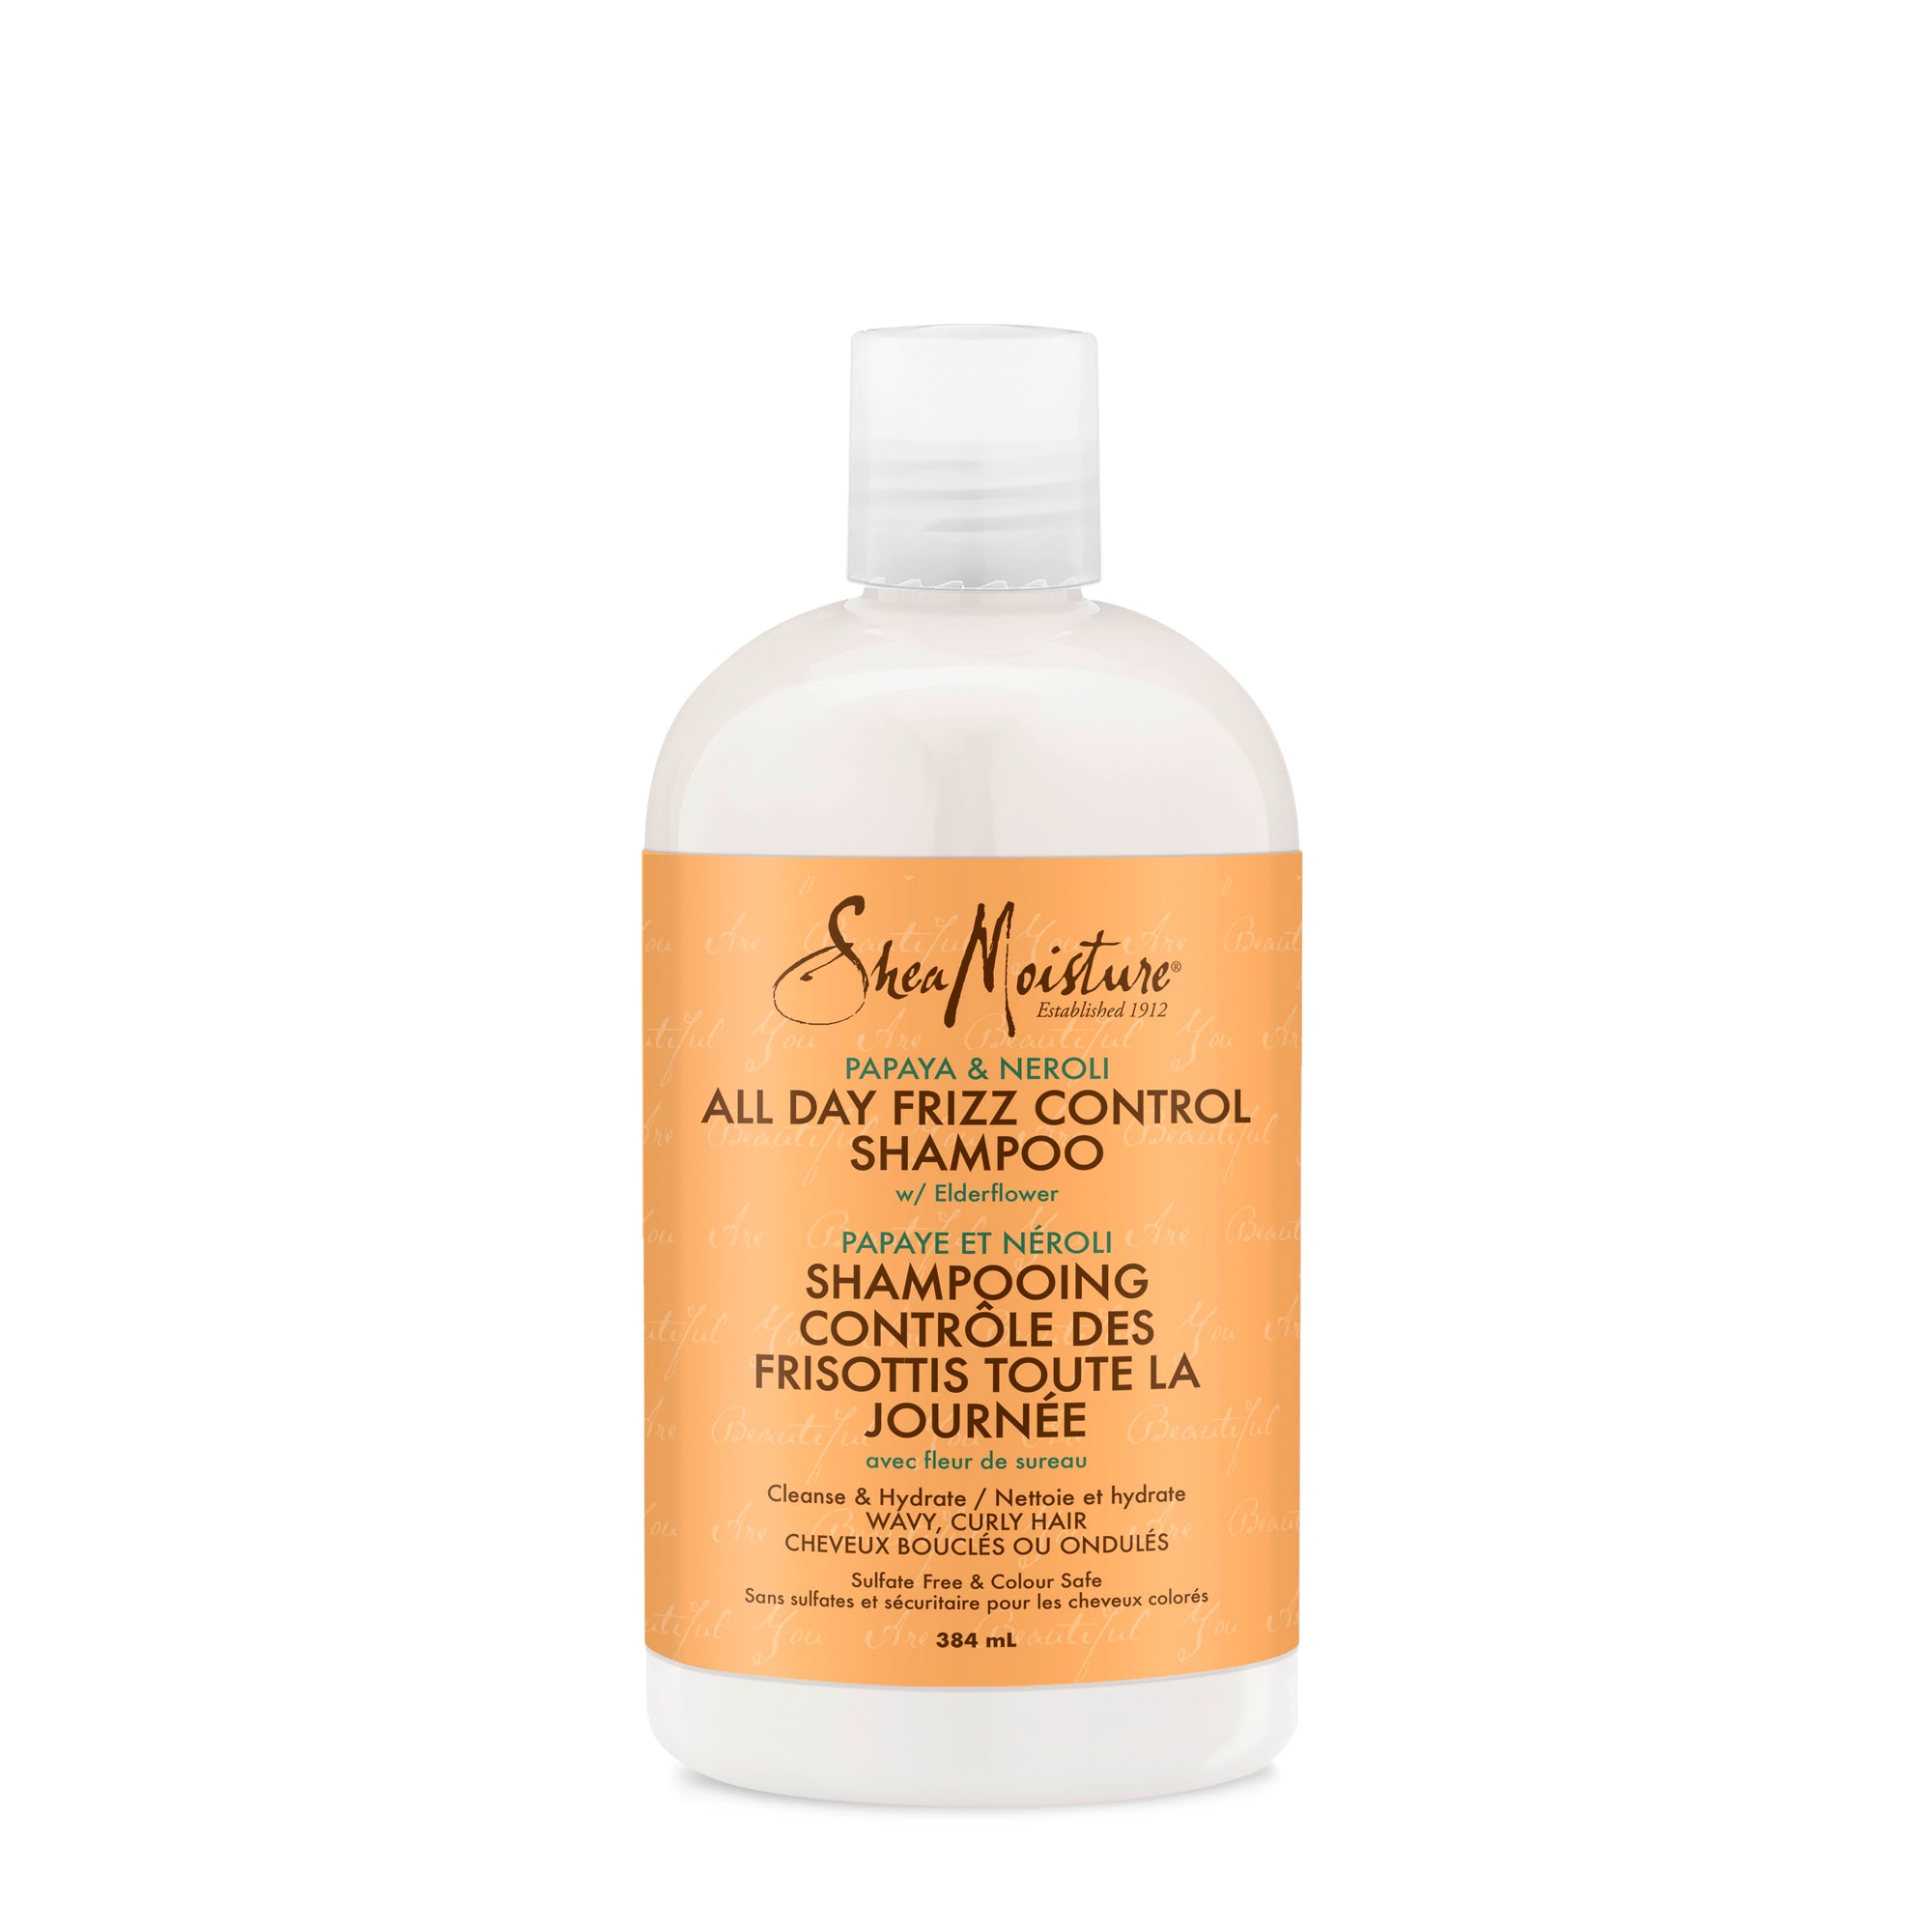 Showing the front angle view of the SheaMoisture Papaya & Neroli Frizz Control Shampoo 384mL product.